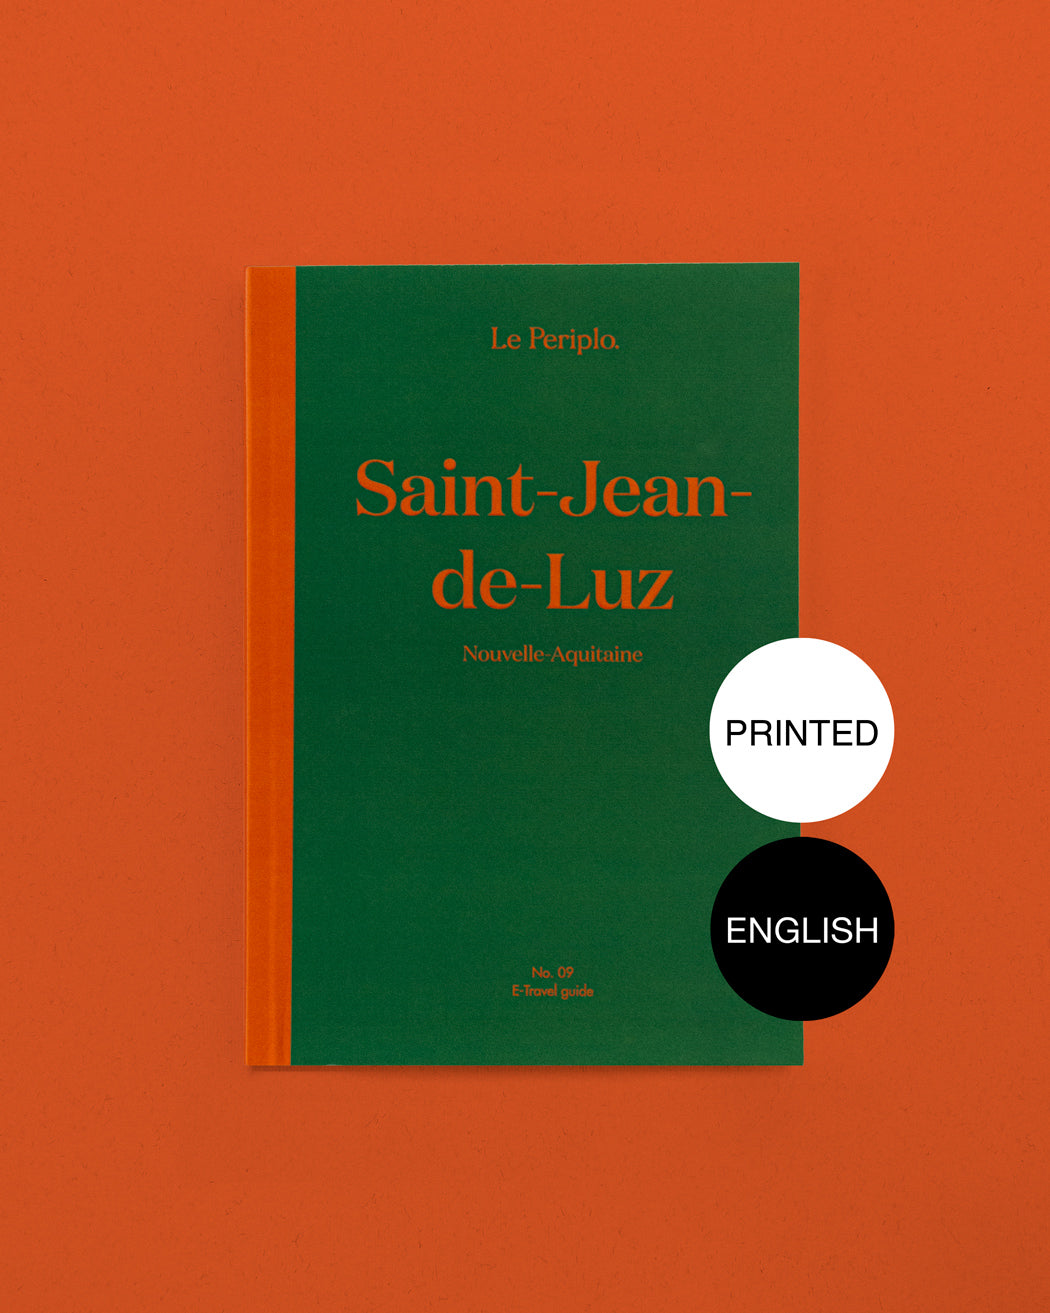 Saint-Jean-de-Luz (printed) Spanish version